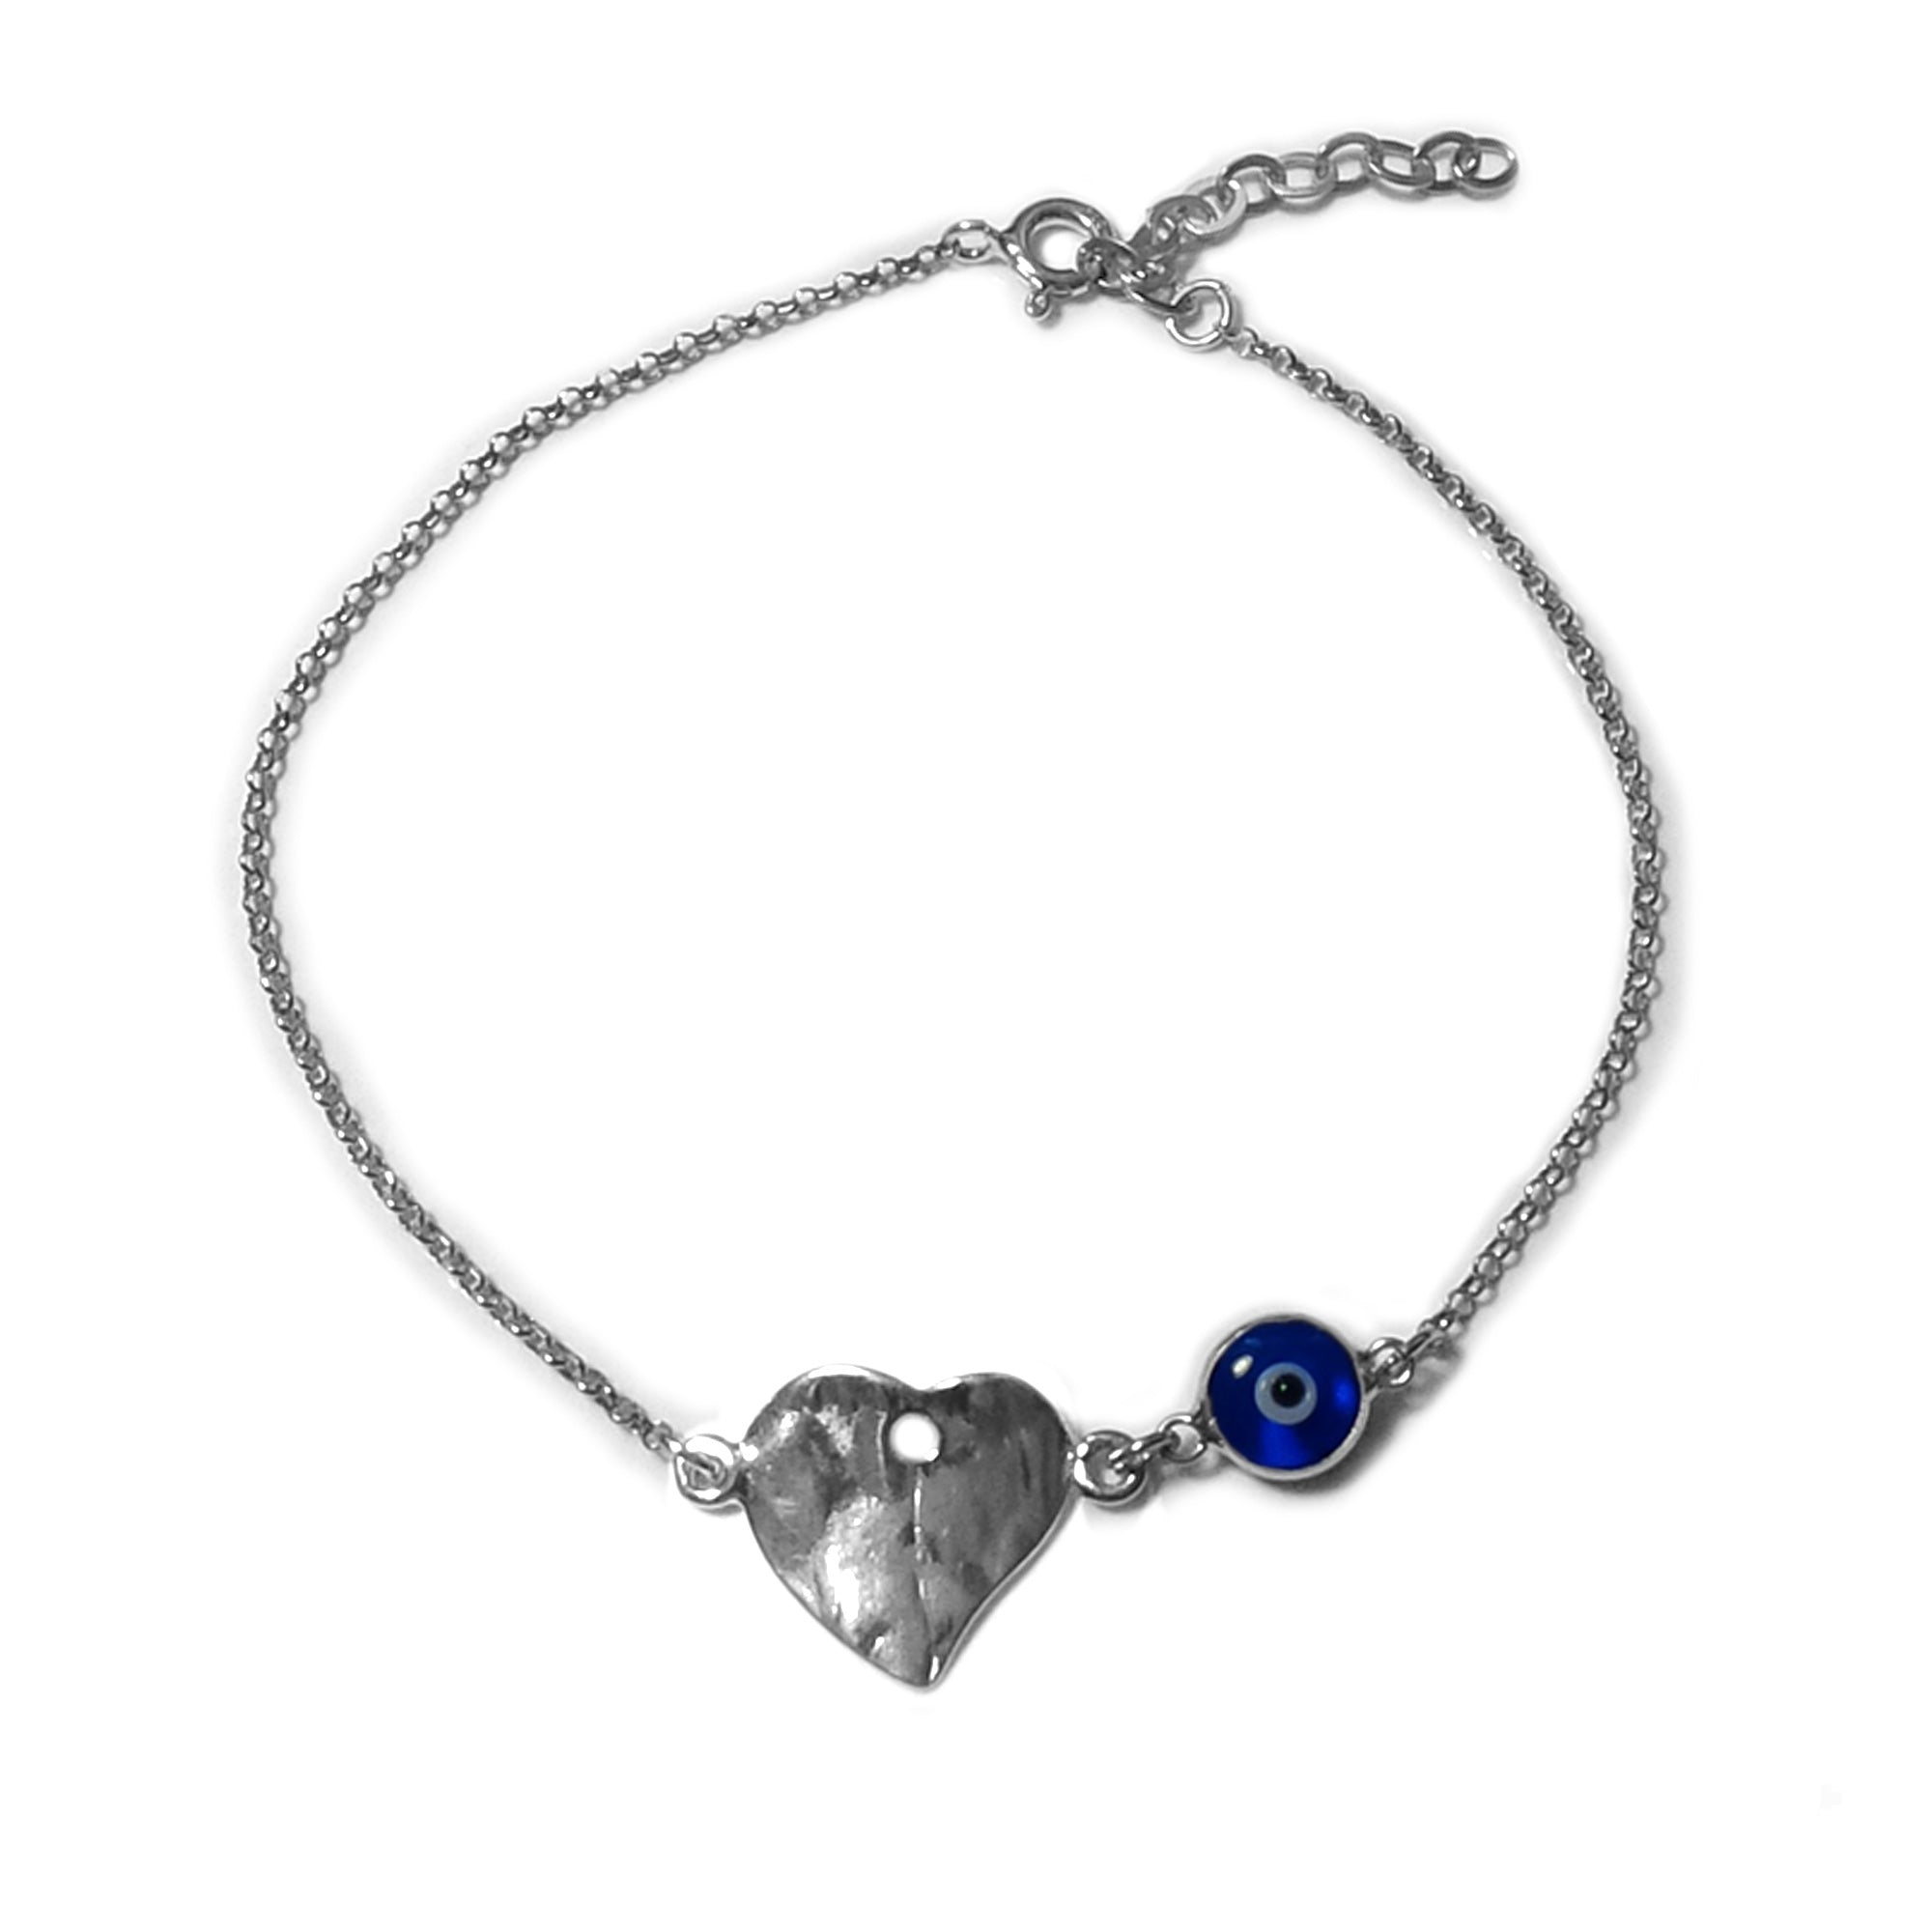 Hammered Heart Double Sided Evil Eye Adjustable Bracelet Sterling Silver, 7" to 8.5"